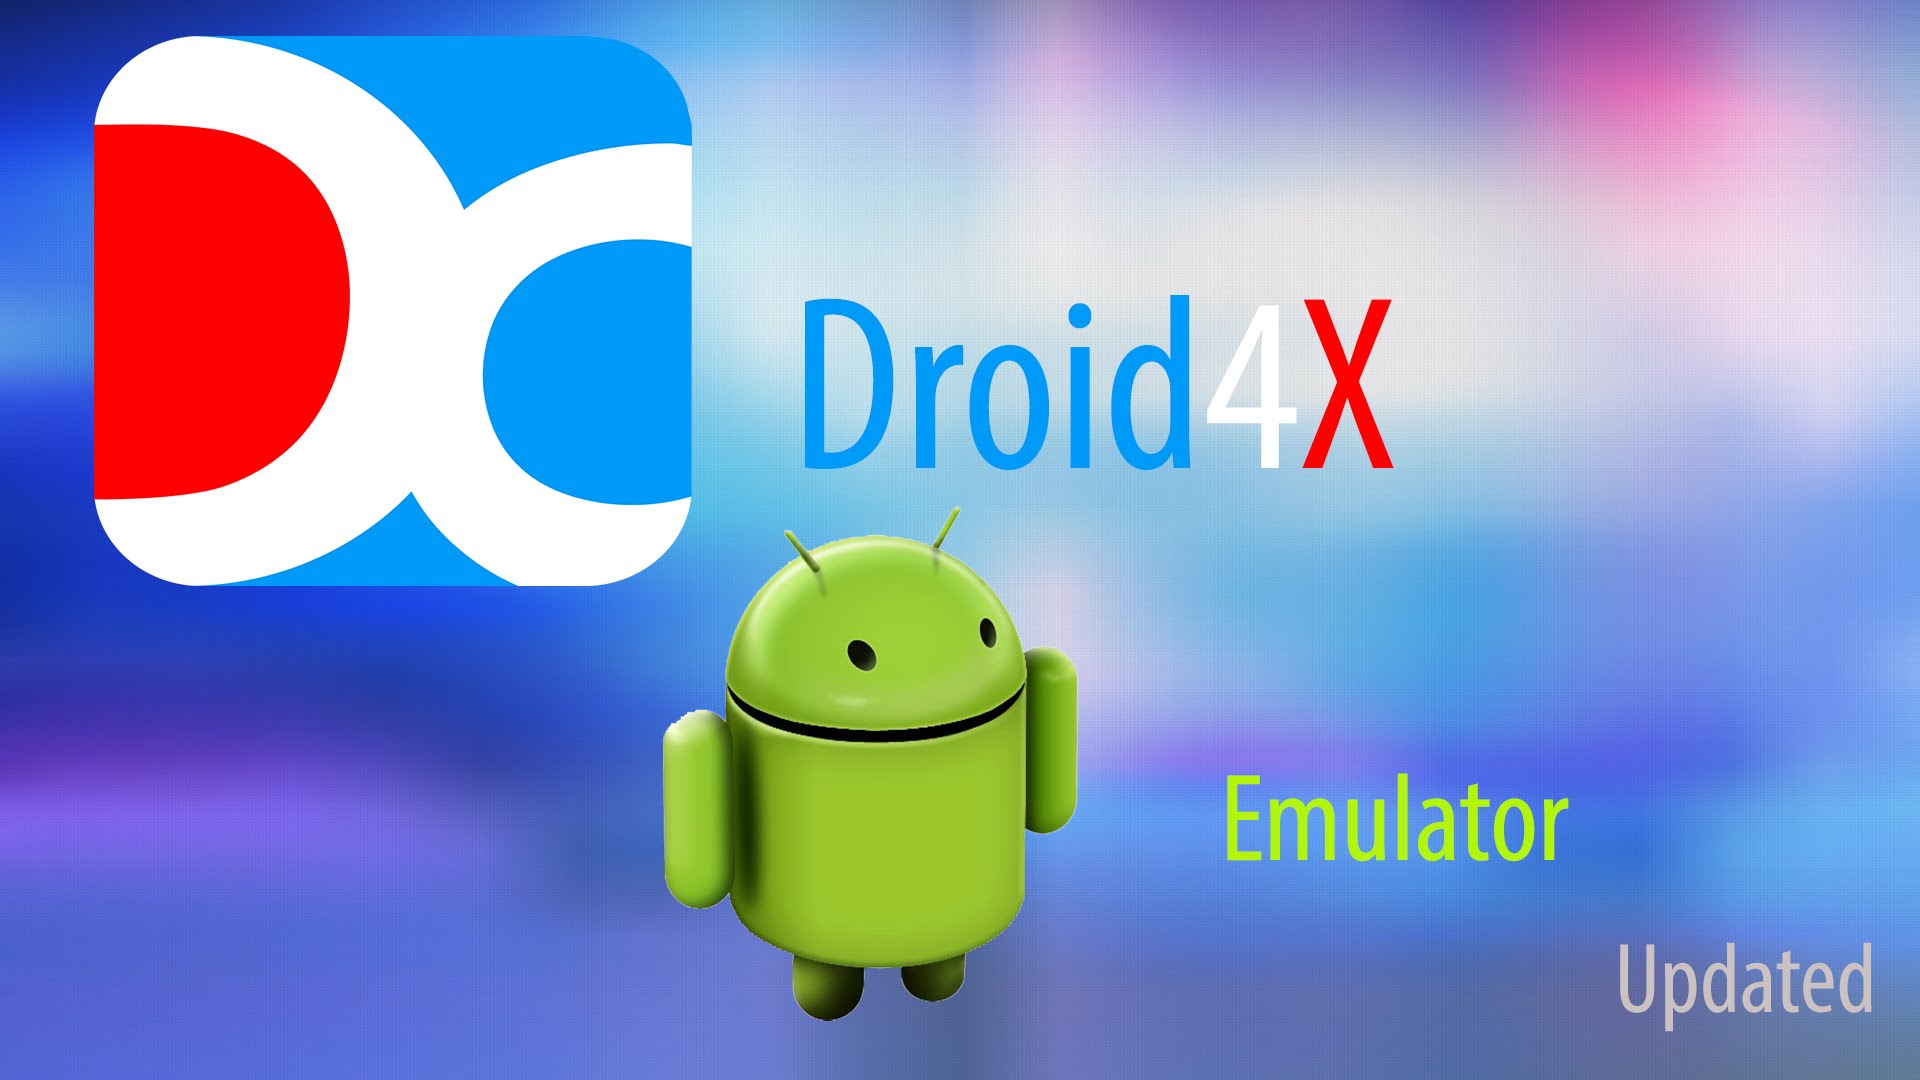 droid4x emulator offline installer